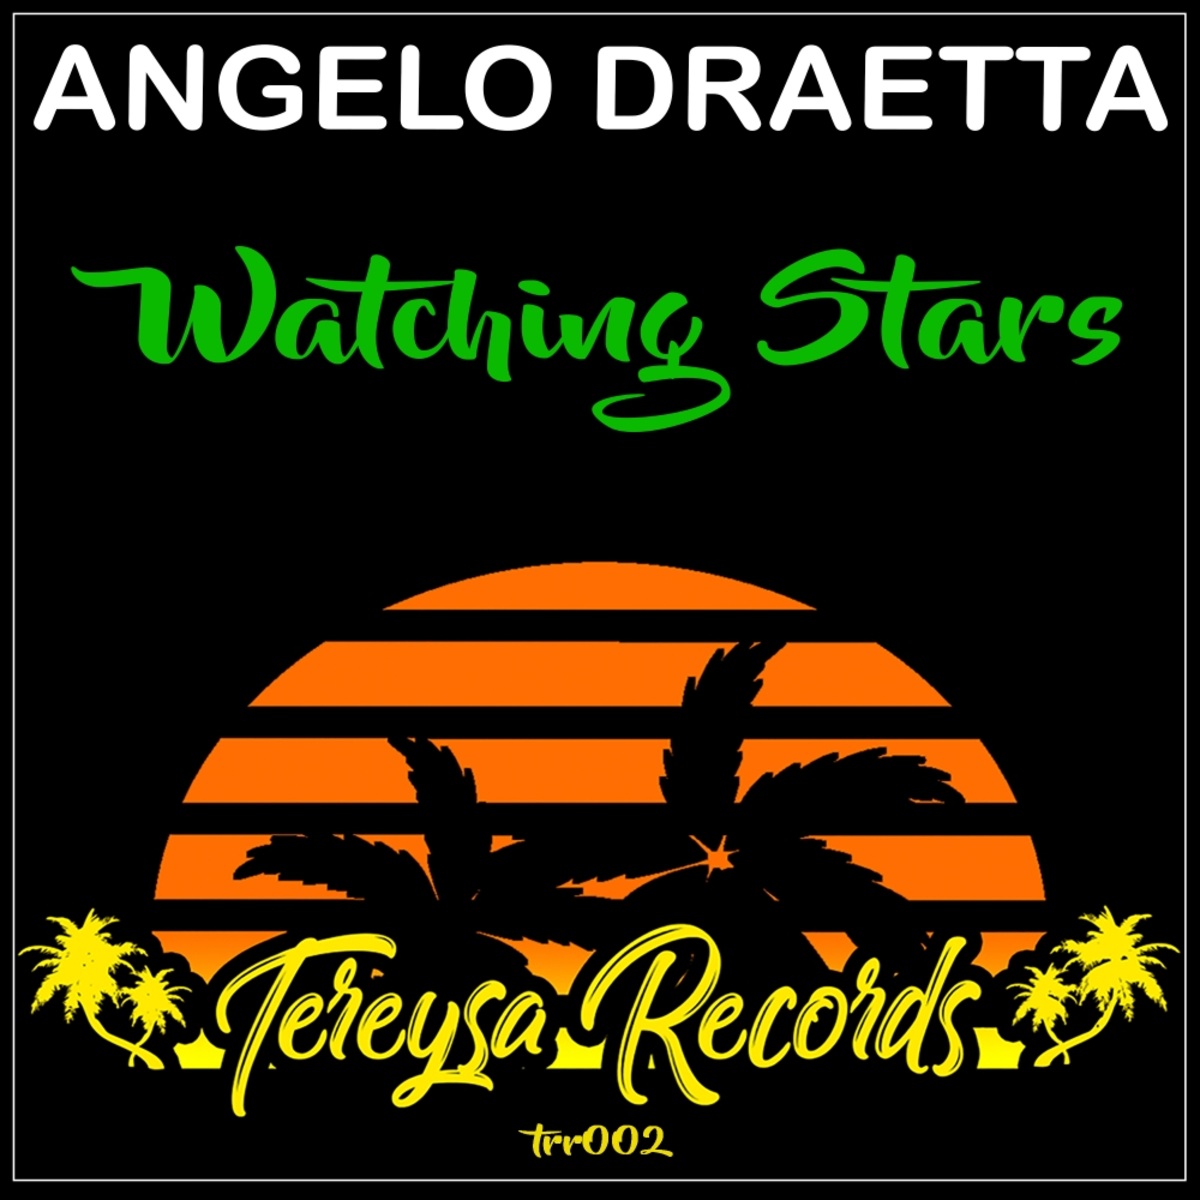 Angelo Draetta - Watching Stars / Tereysa Records